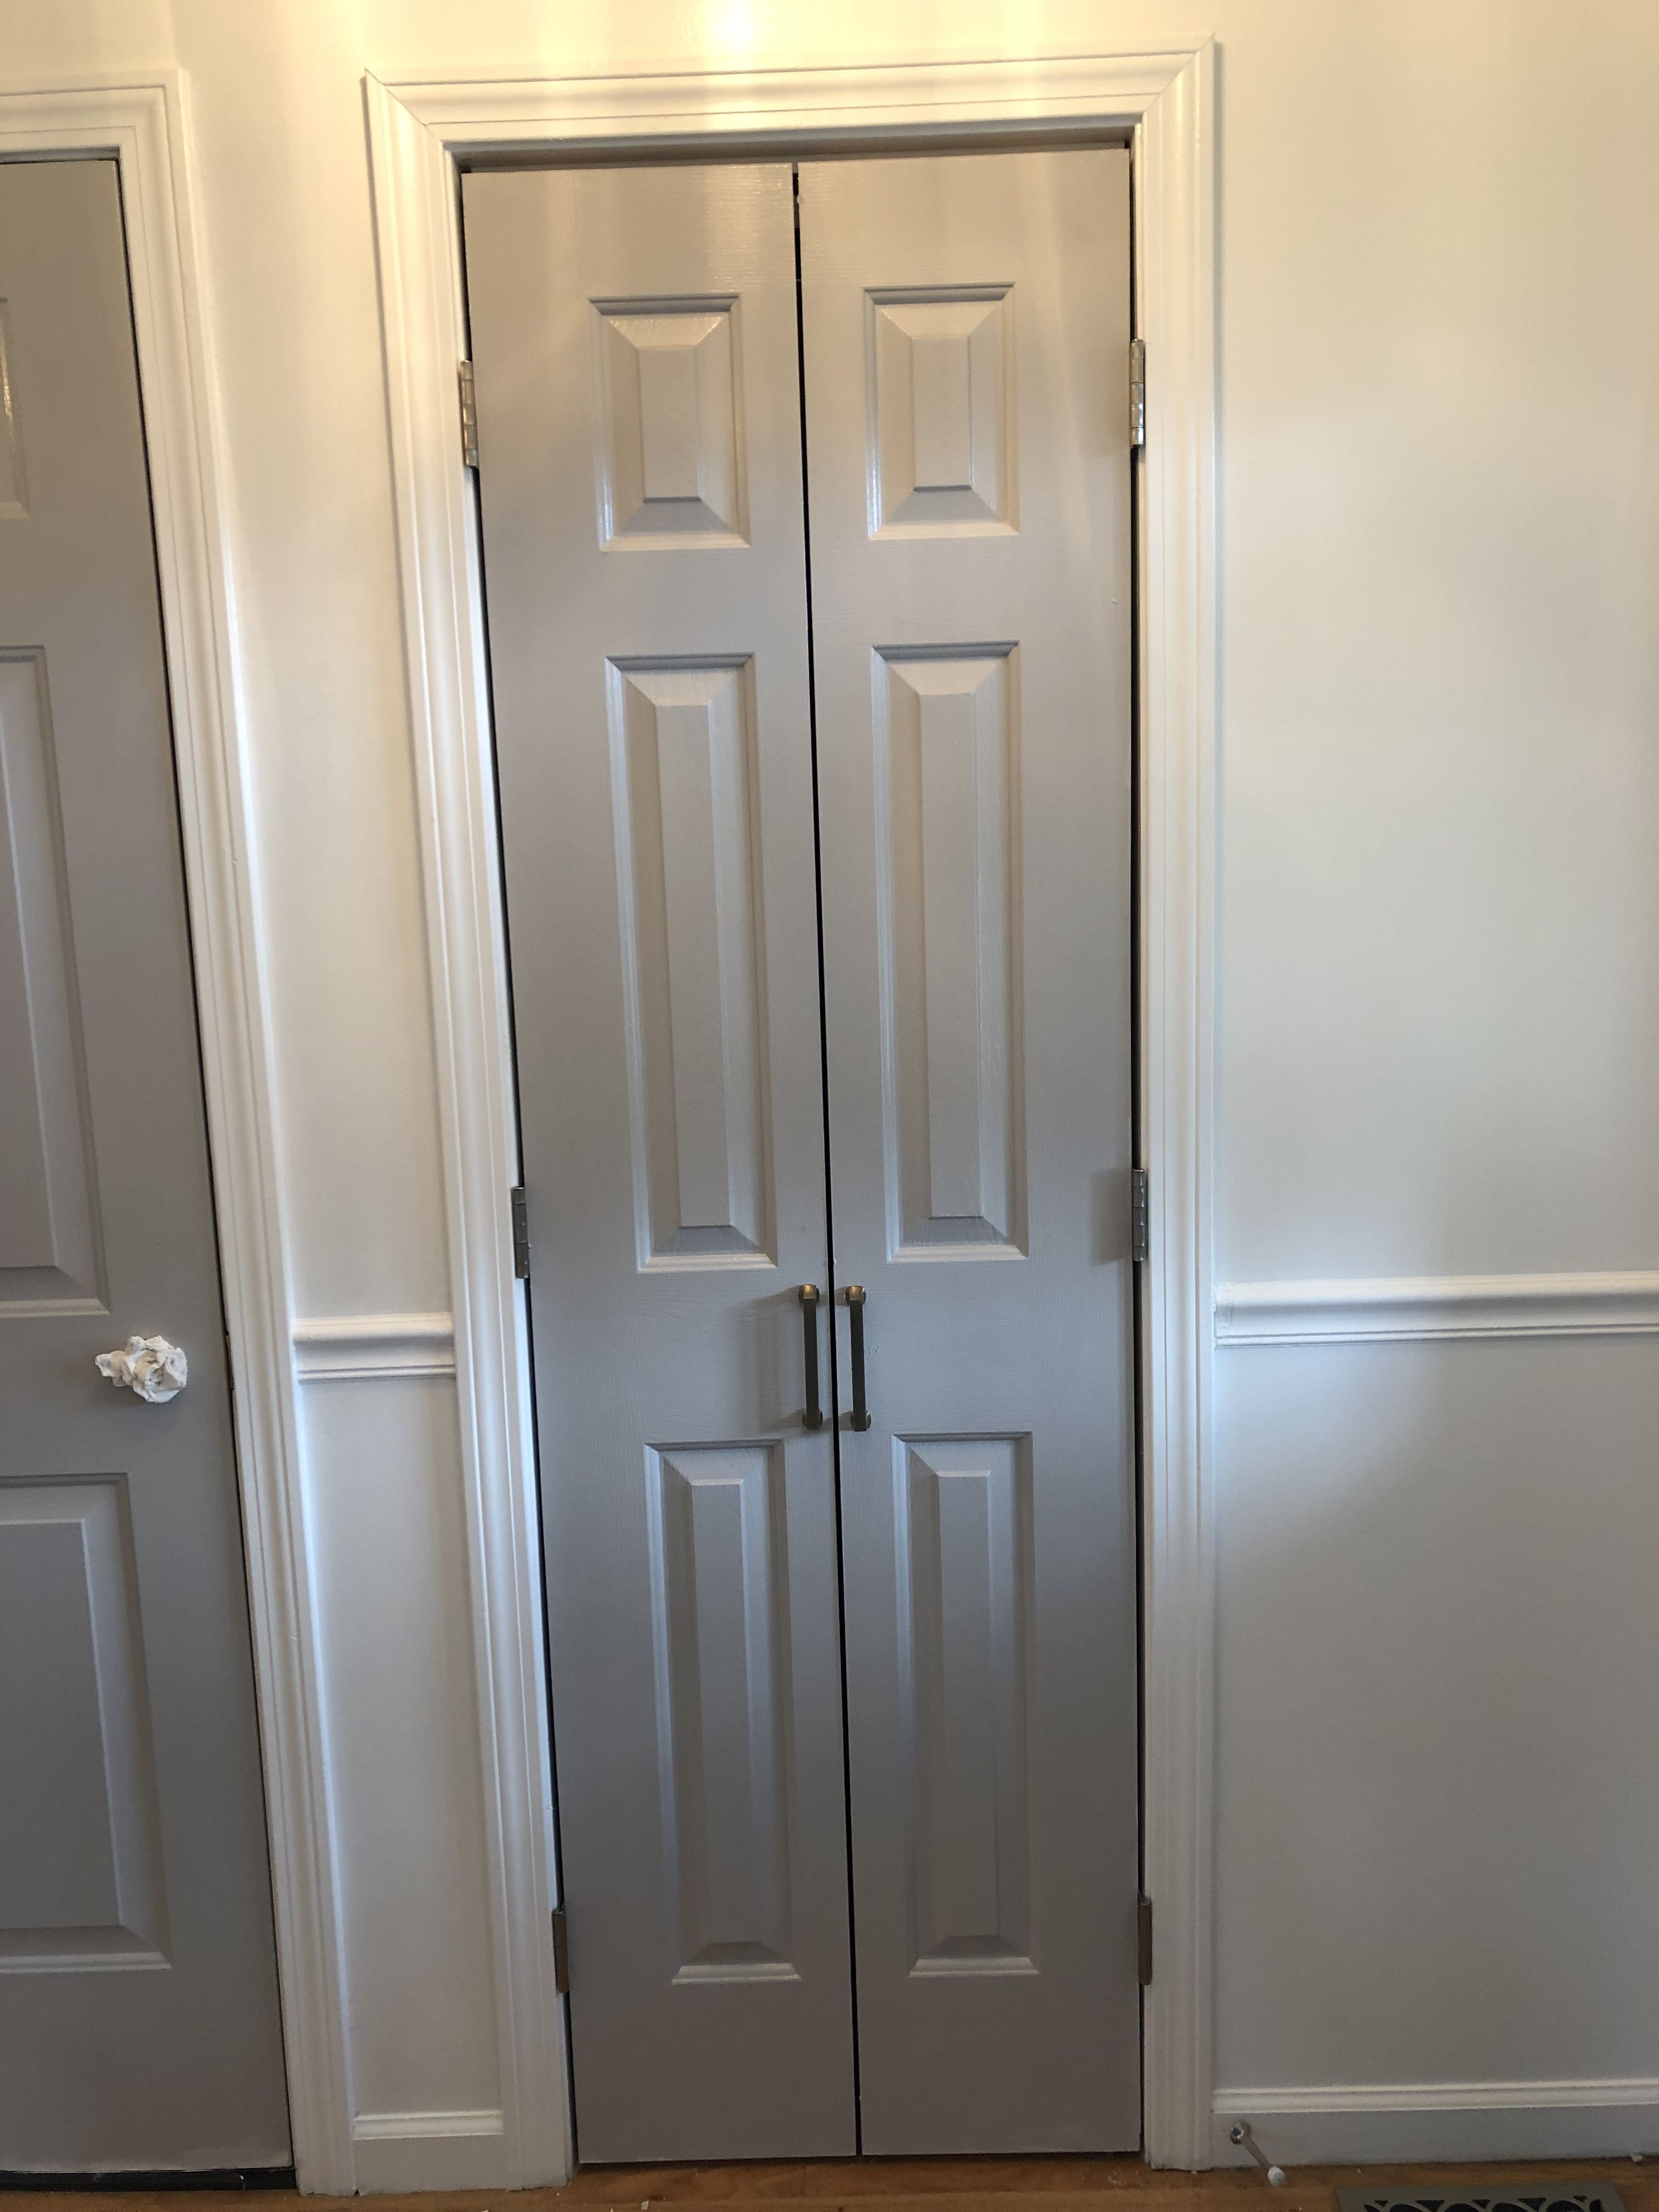 Двухстворчатая дверь шкафа